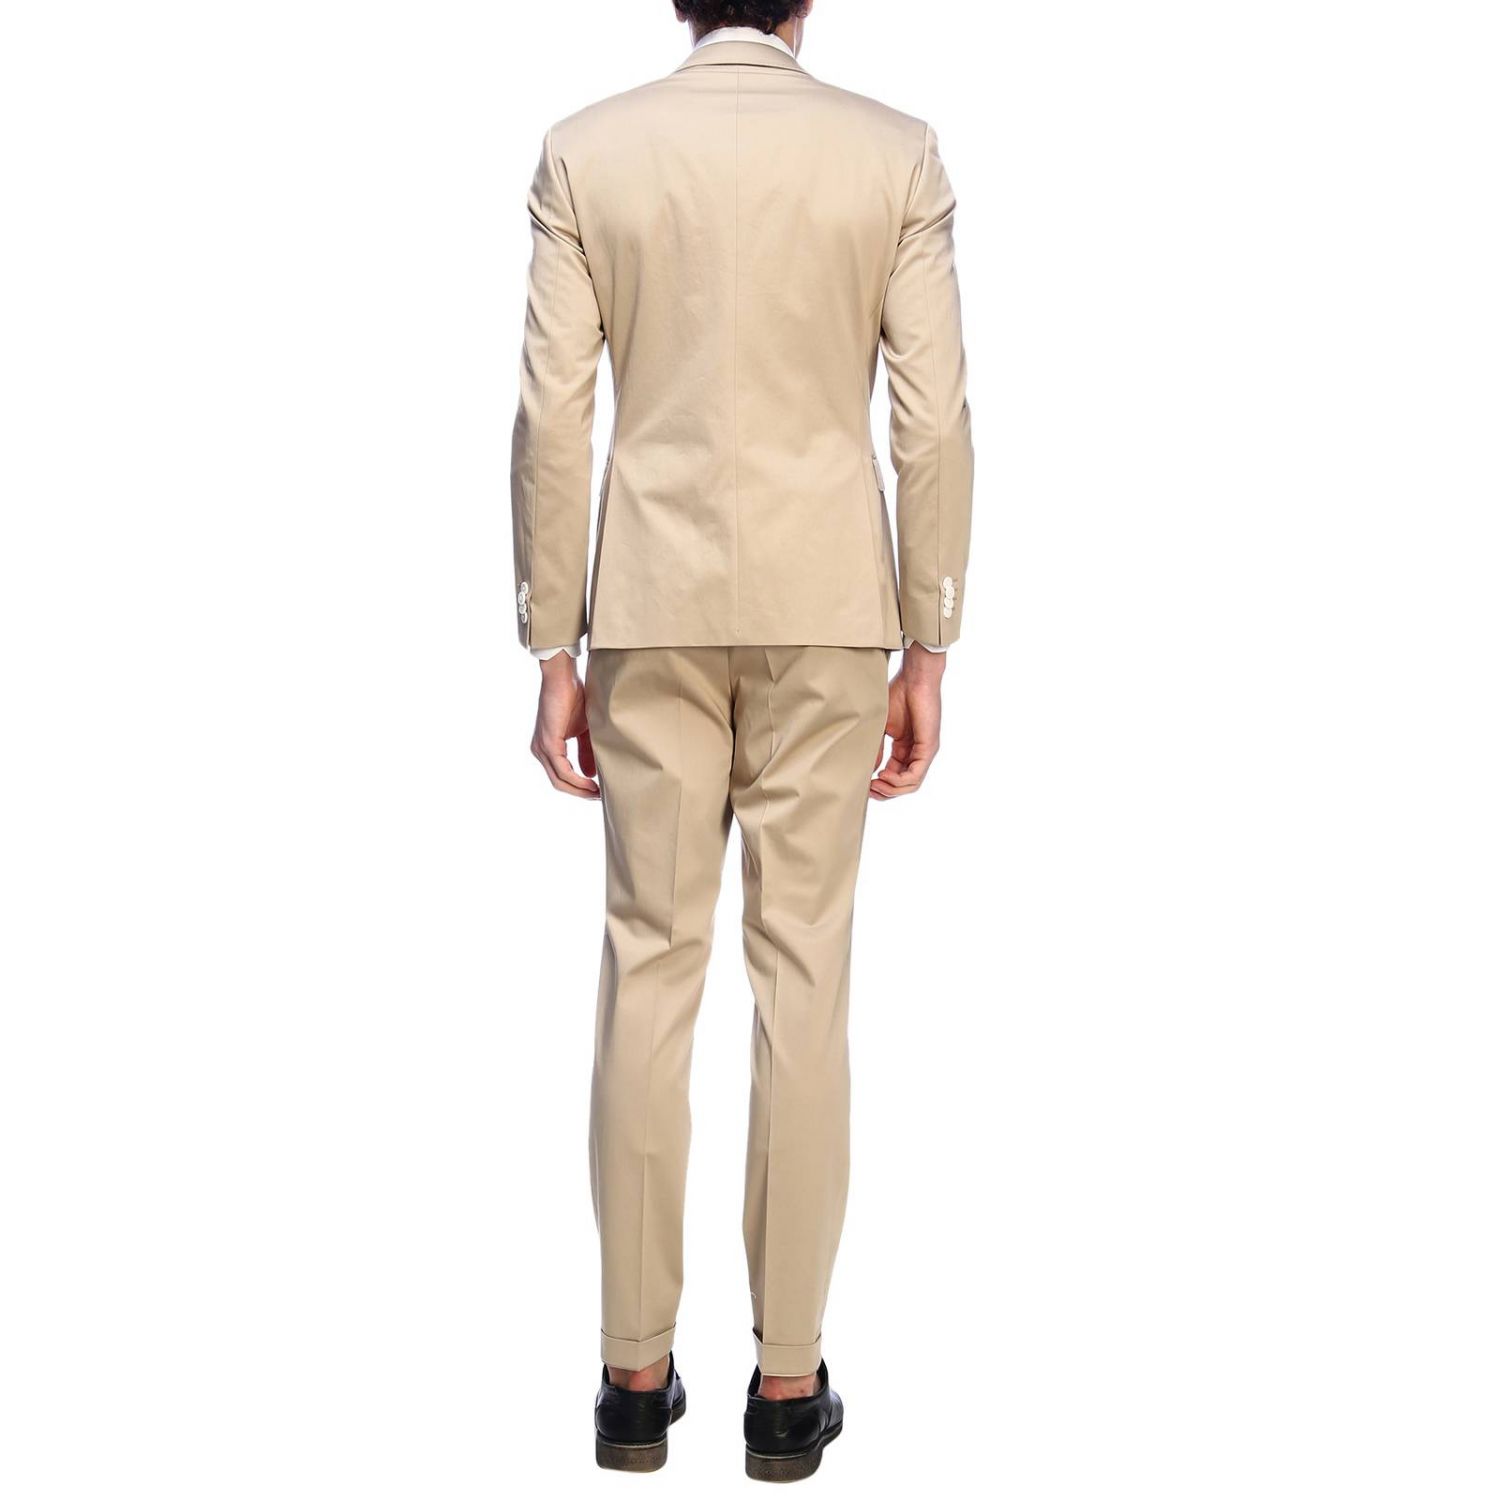 Hugo Boss Outlet: suit for men - Beige | Hugo Boss suit 18210186043 ...